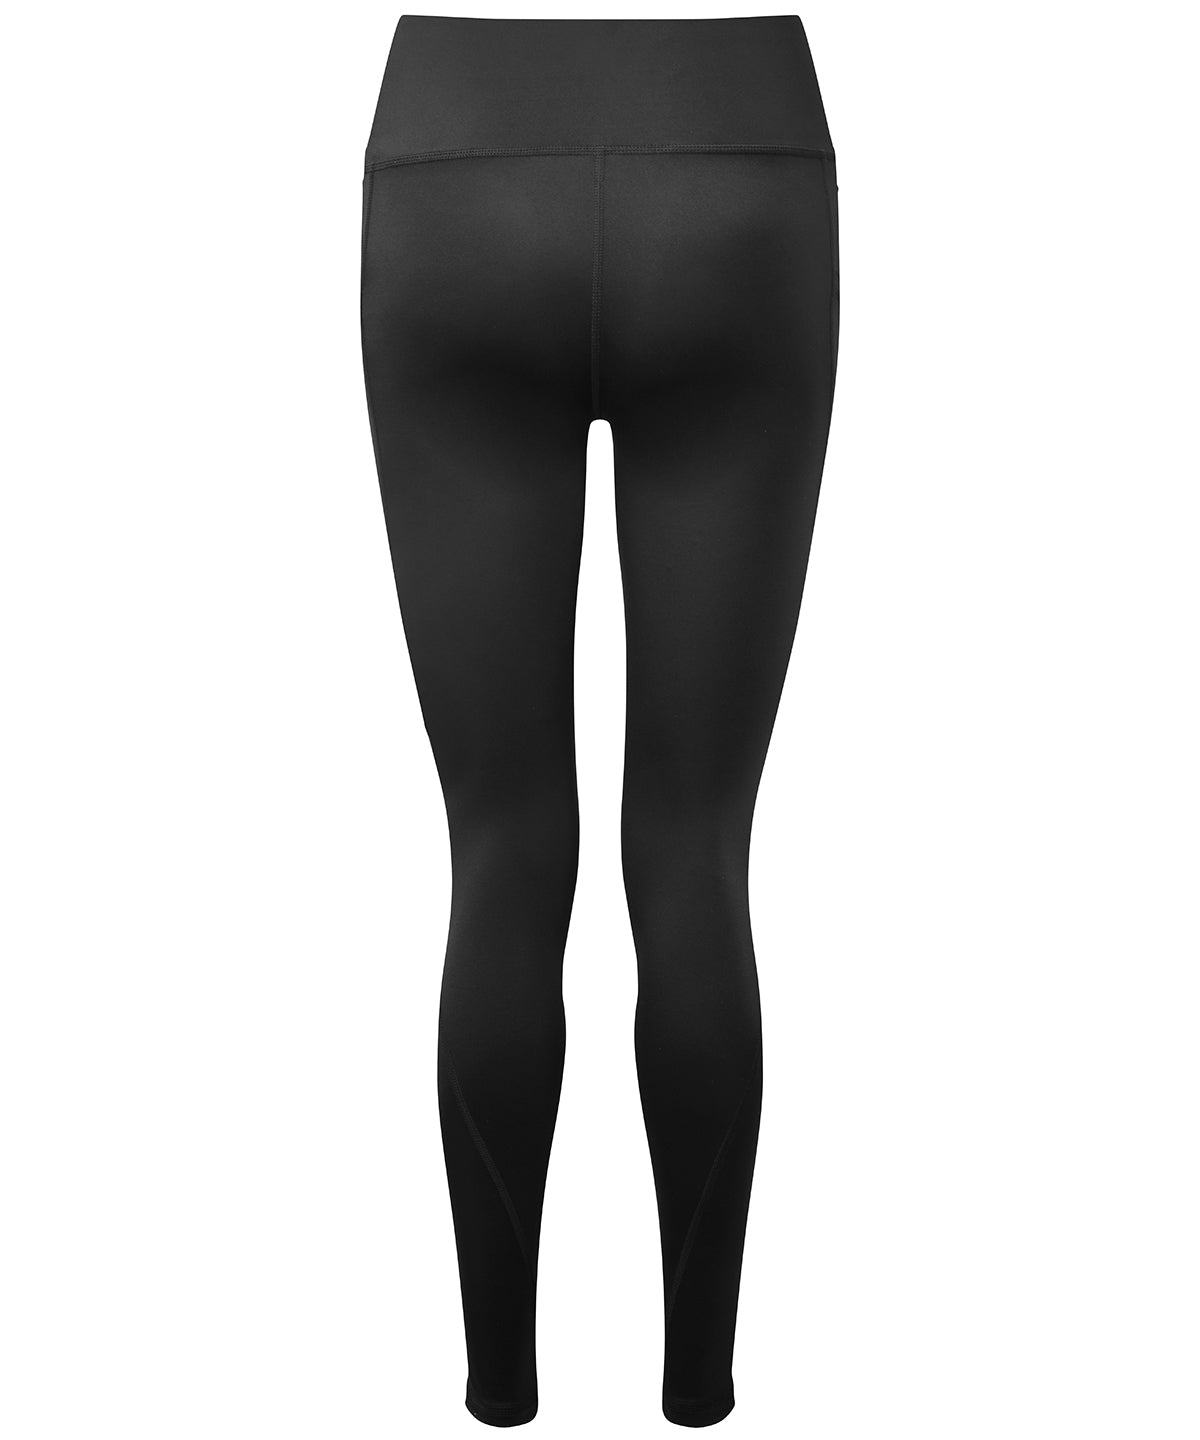 Women's TriDri® High-Shine leggings - Hamtons Direct